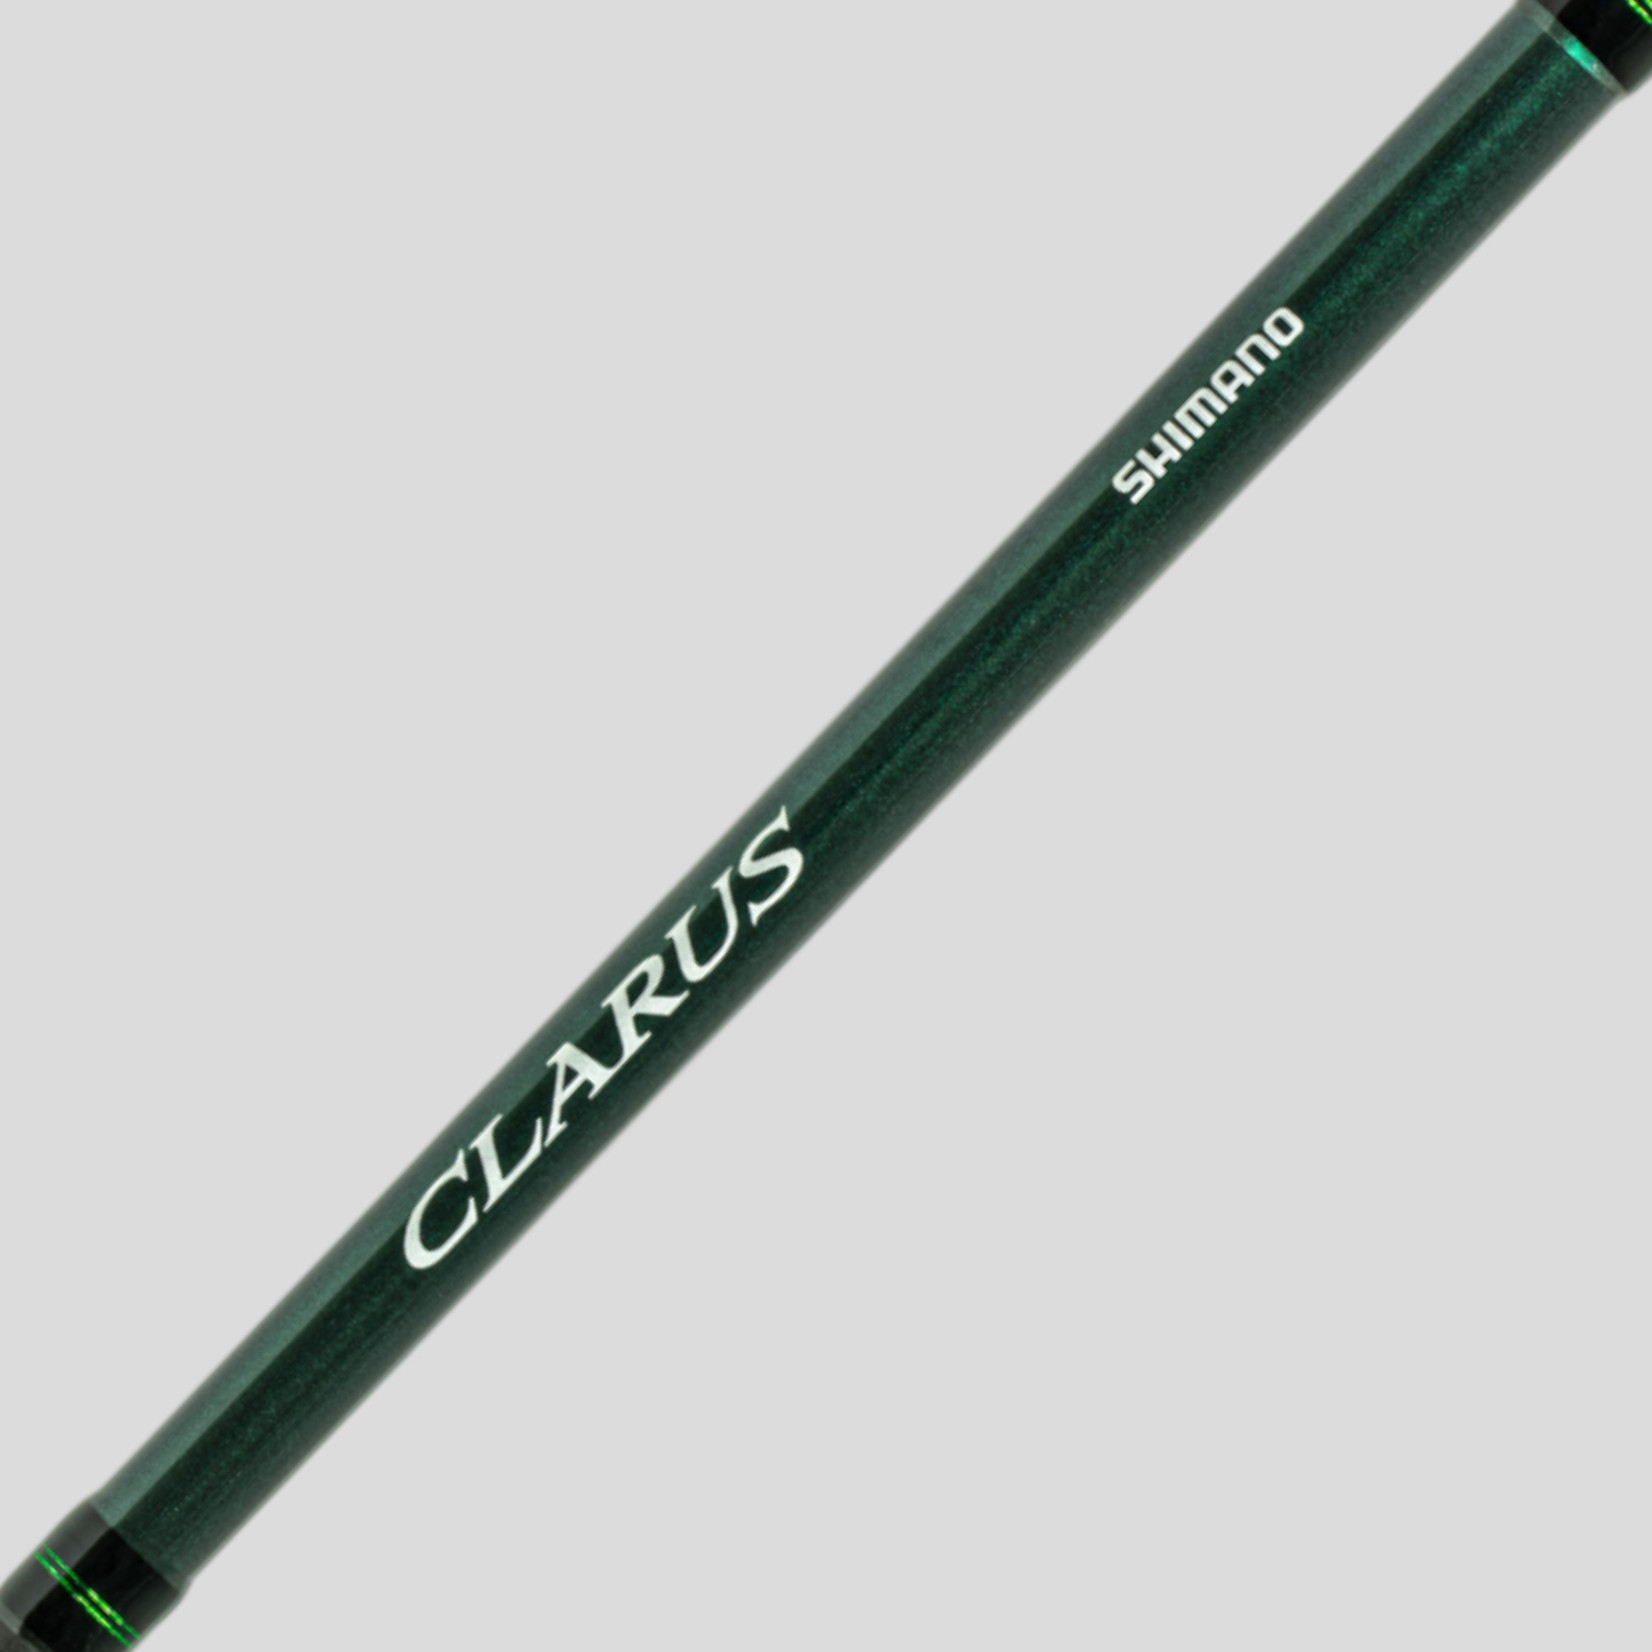 Clarus 10' 6 MH Casting Rod